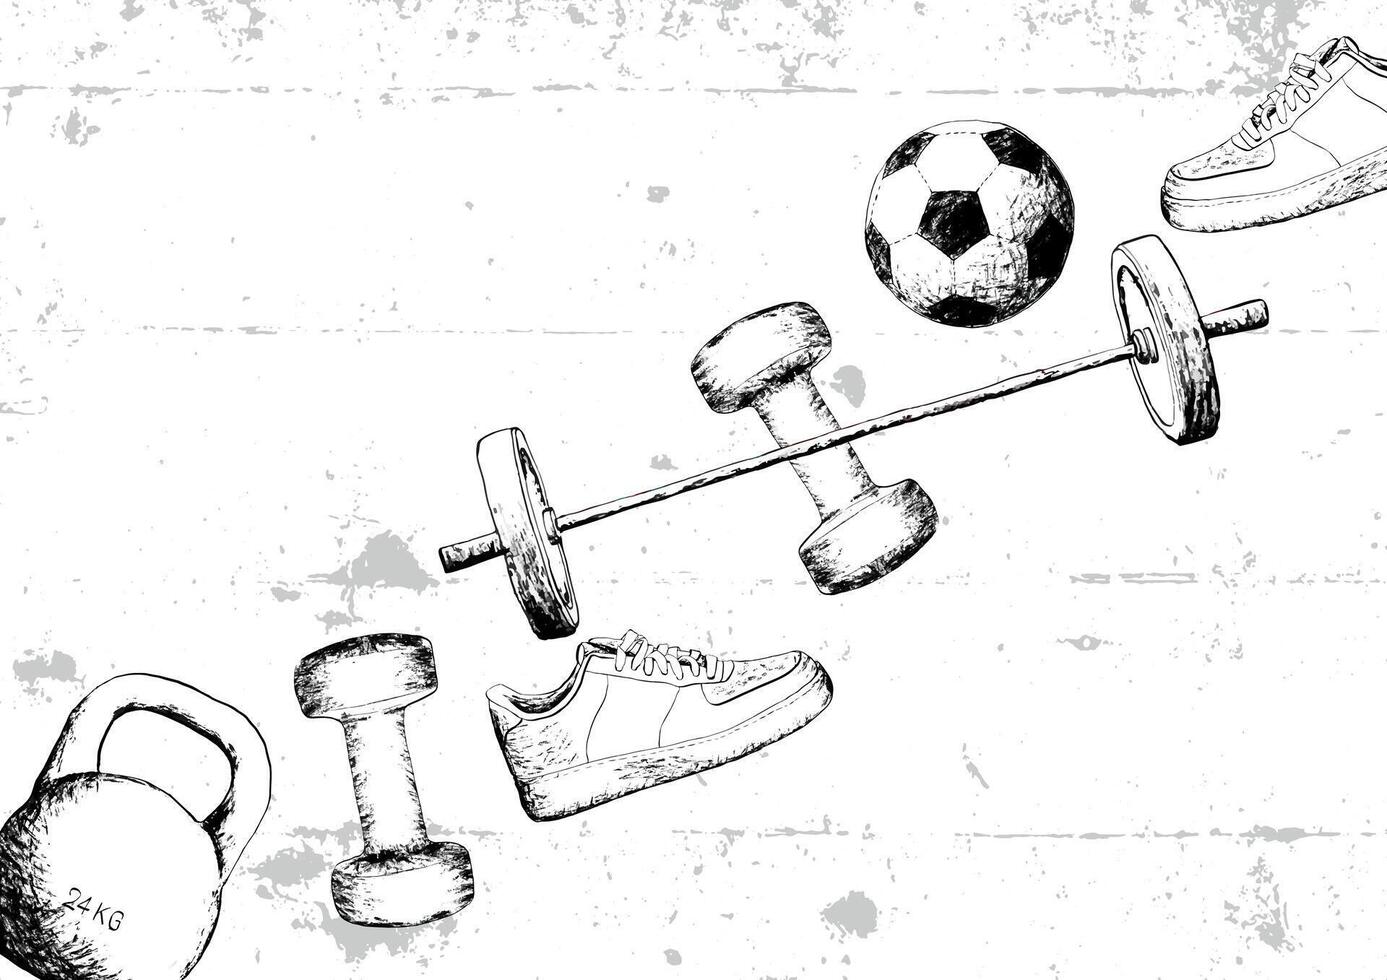 Workout fitness sport sketch grunge style design vector